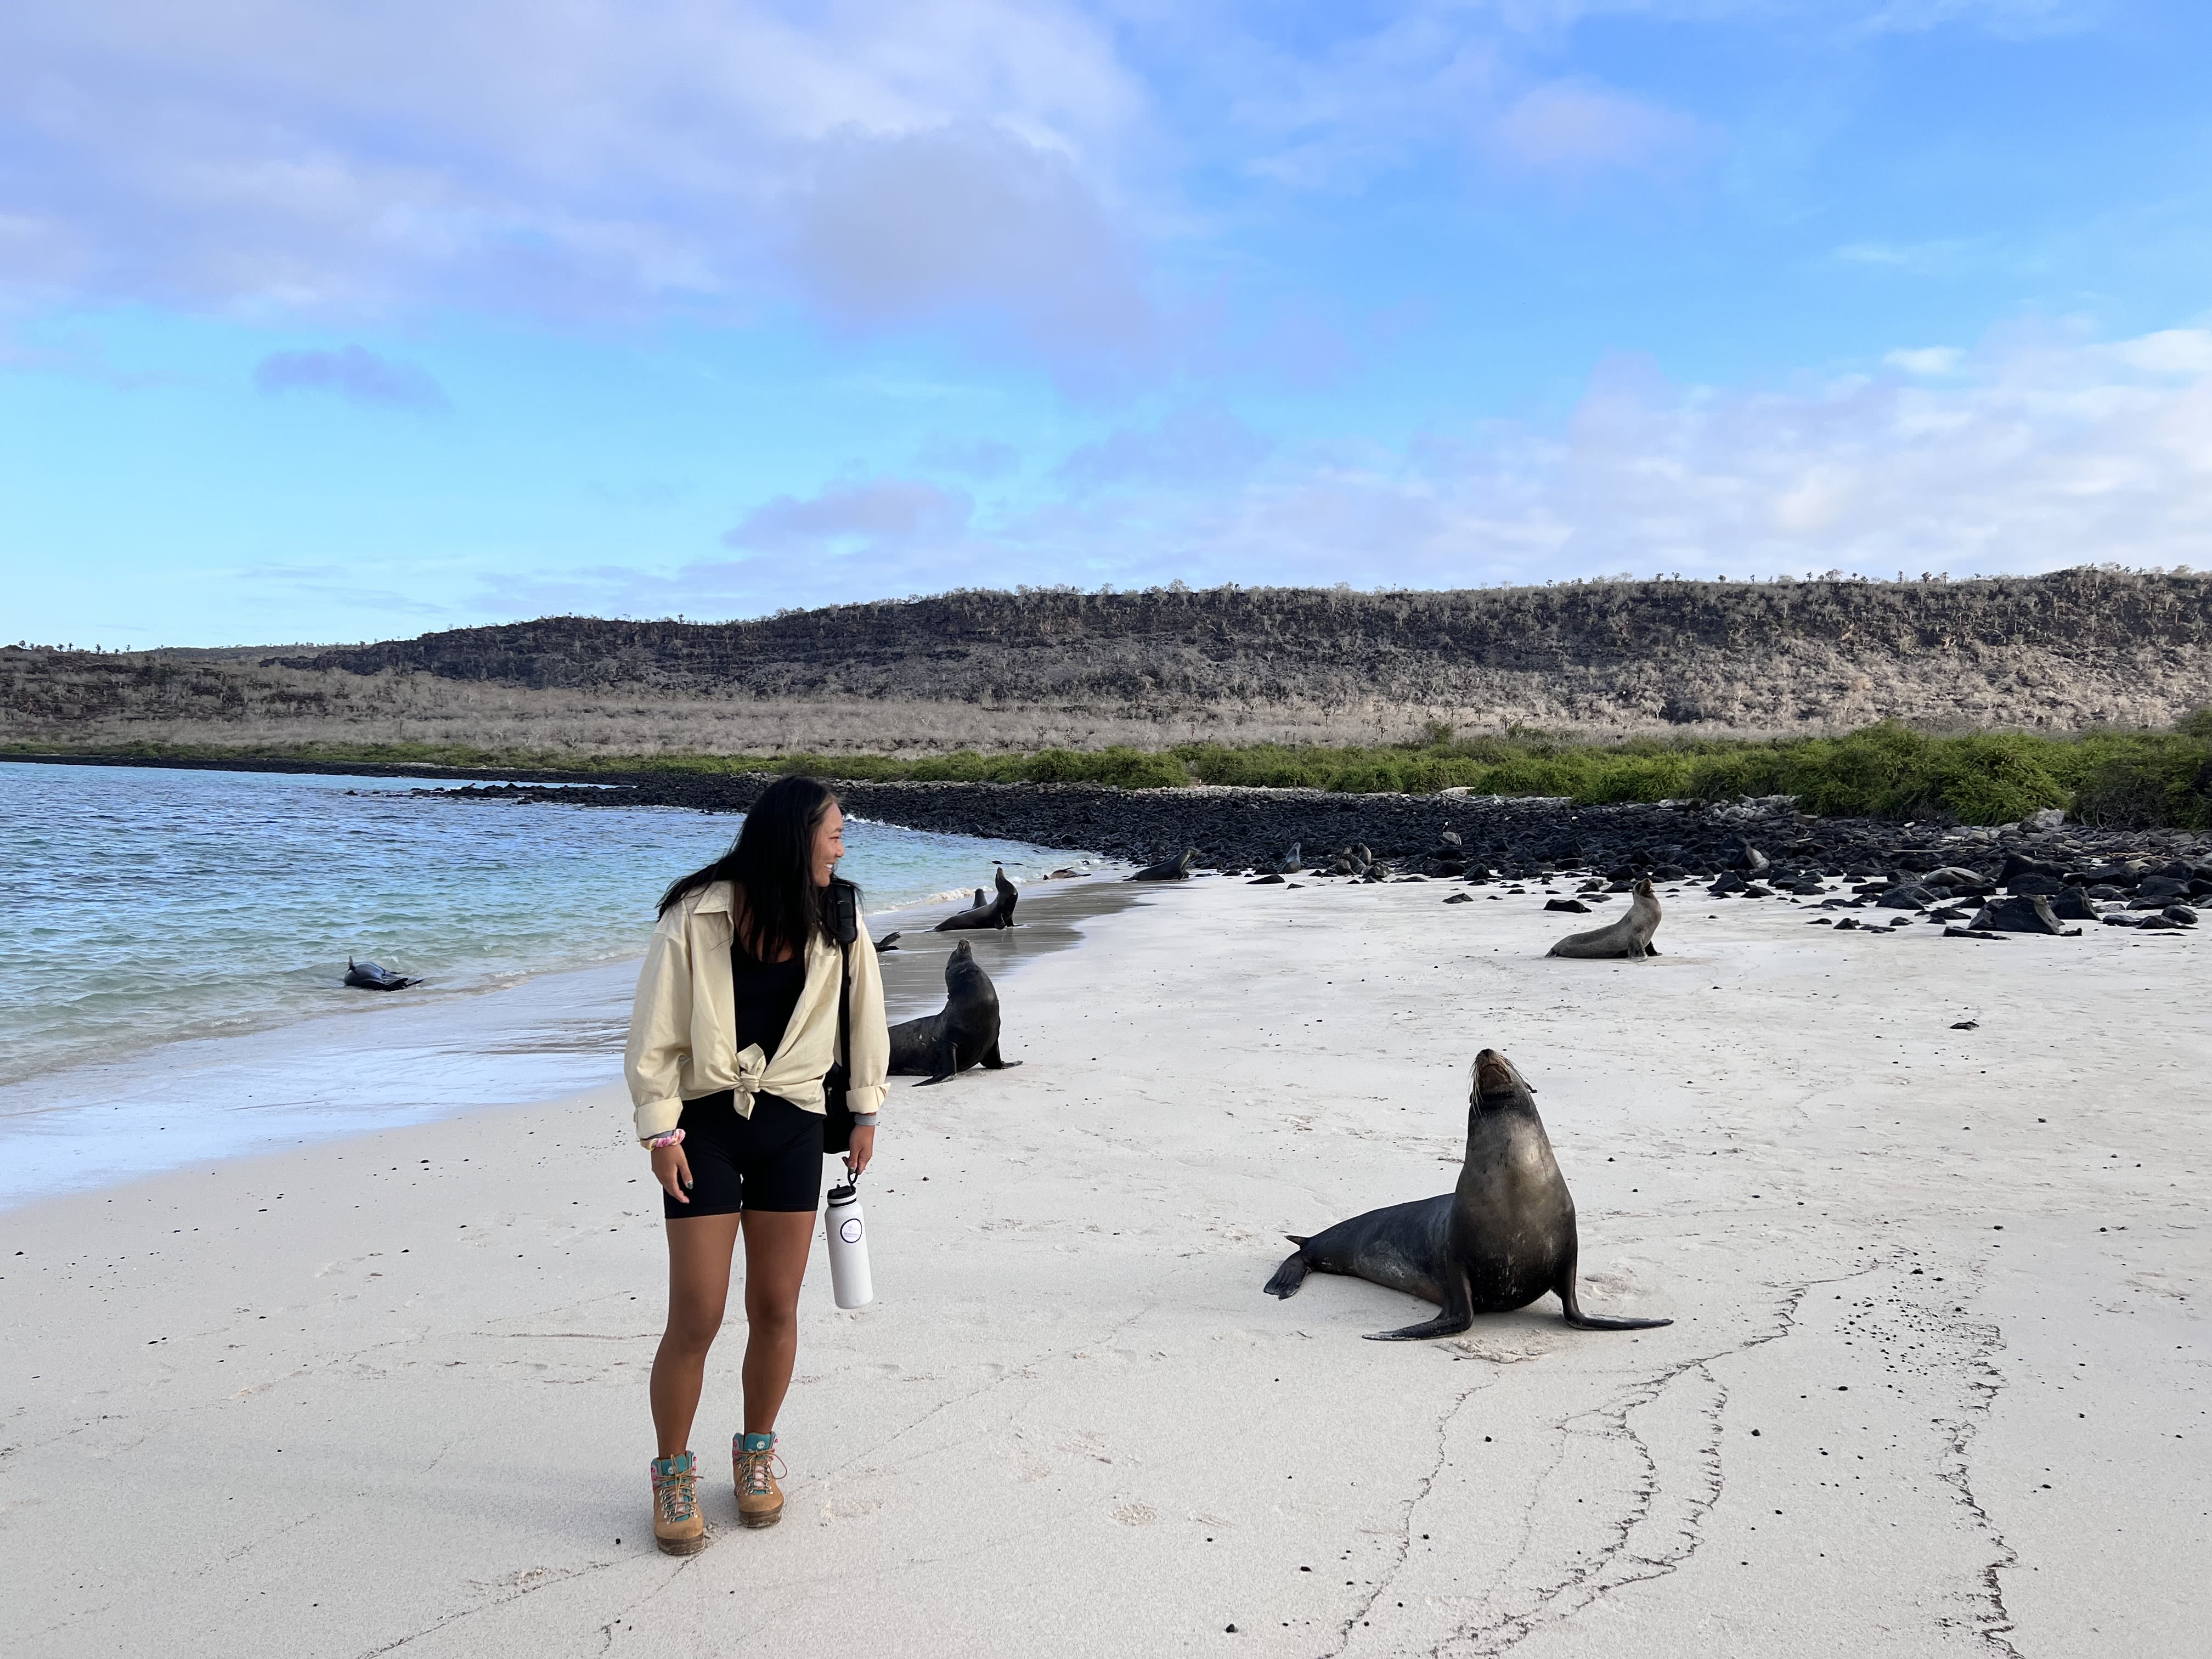 Hu visiting the scenic Galapagos Islands in May 2022.